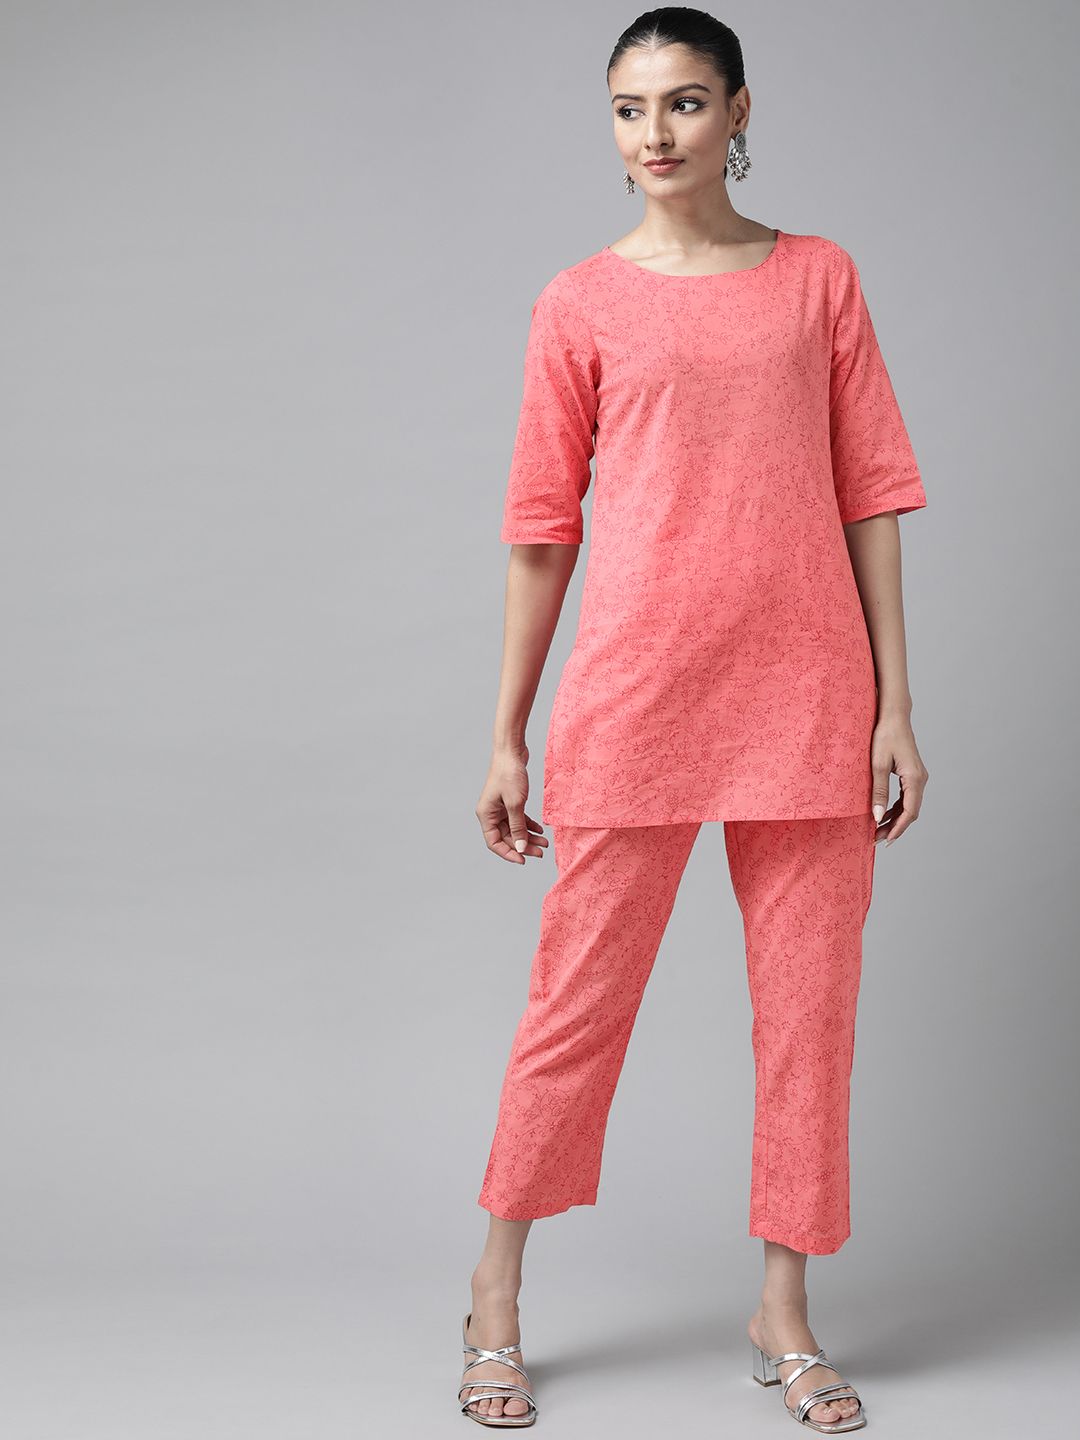 PANIT Women Pink Printed Co-Ord Set Price in India